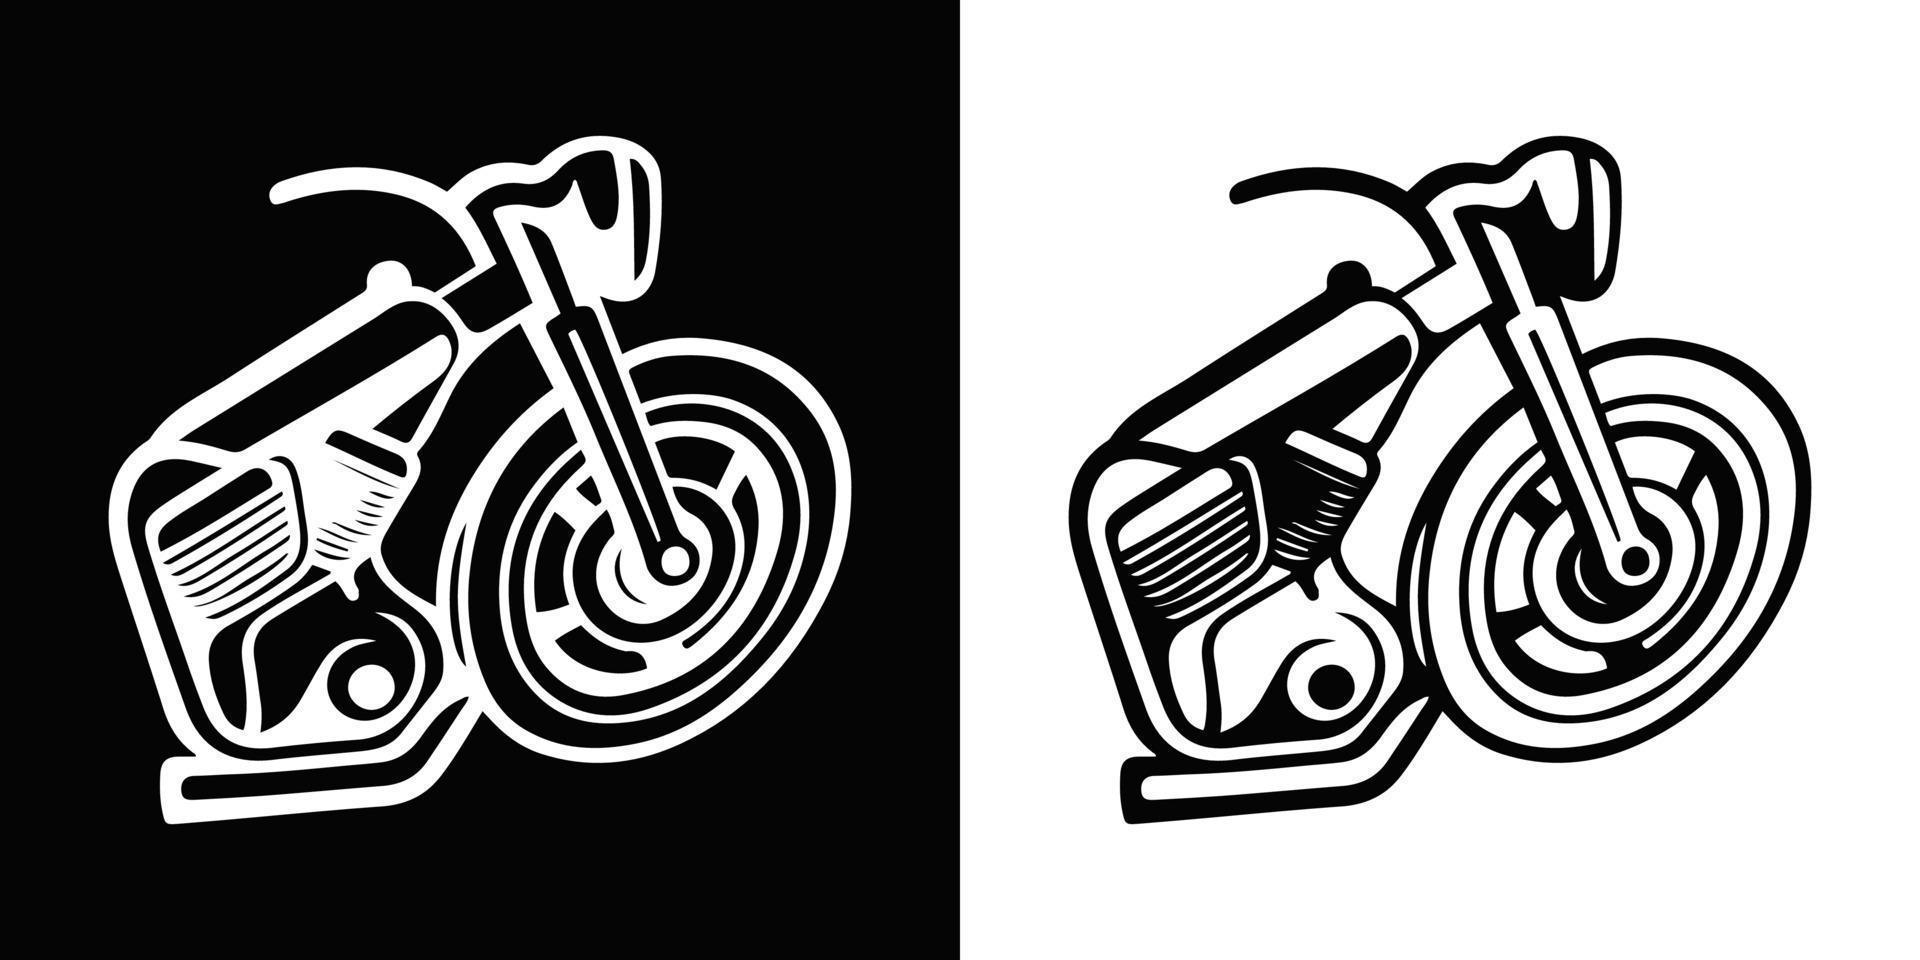 motorcycle logo vector. vector